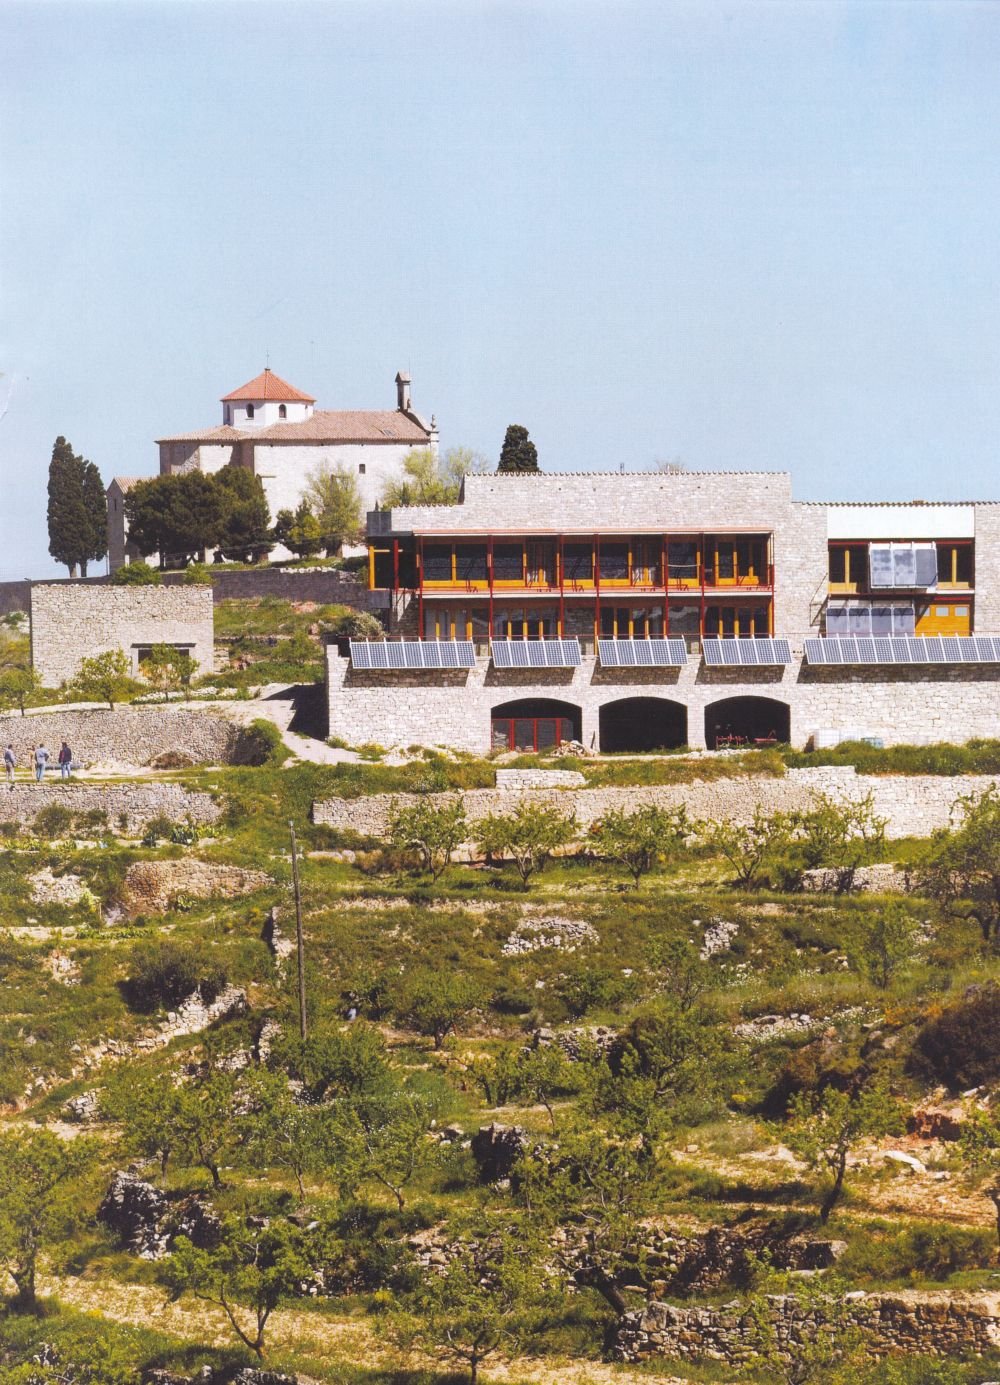 Casa Viva N 86, Casa ecológica en Tarragona.